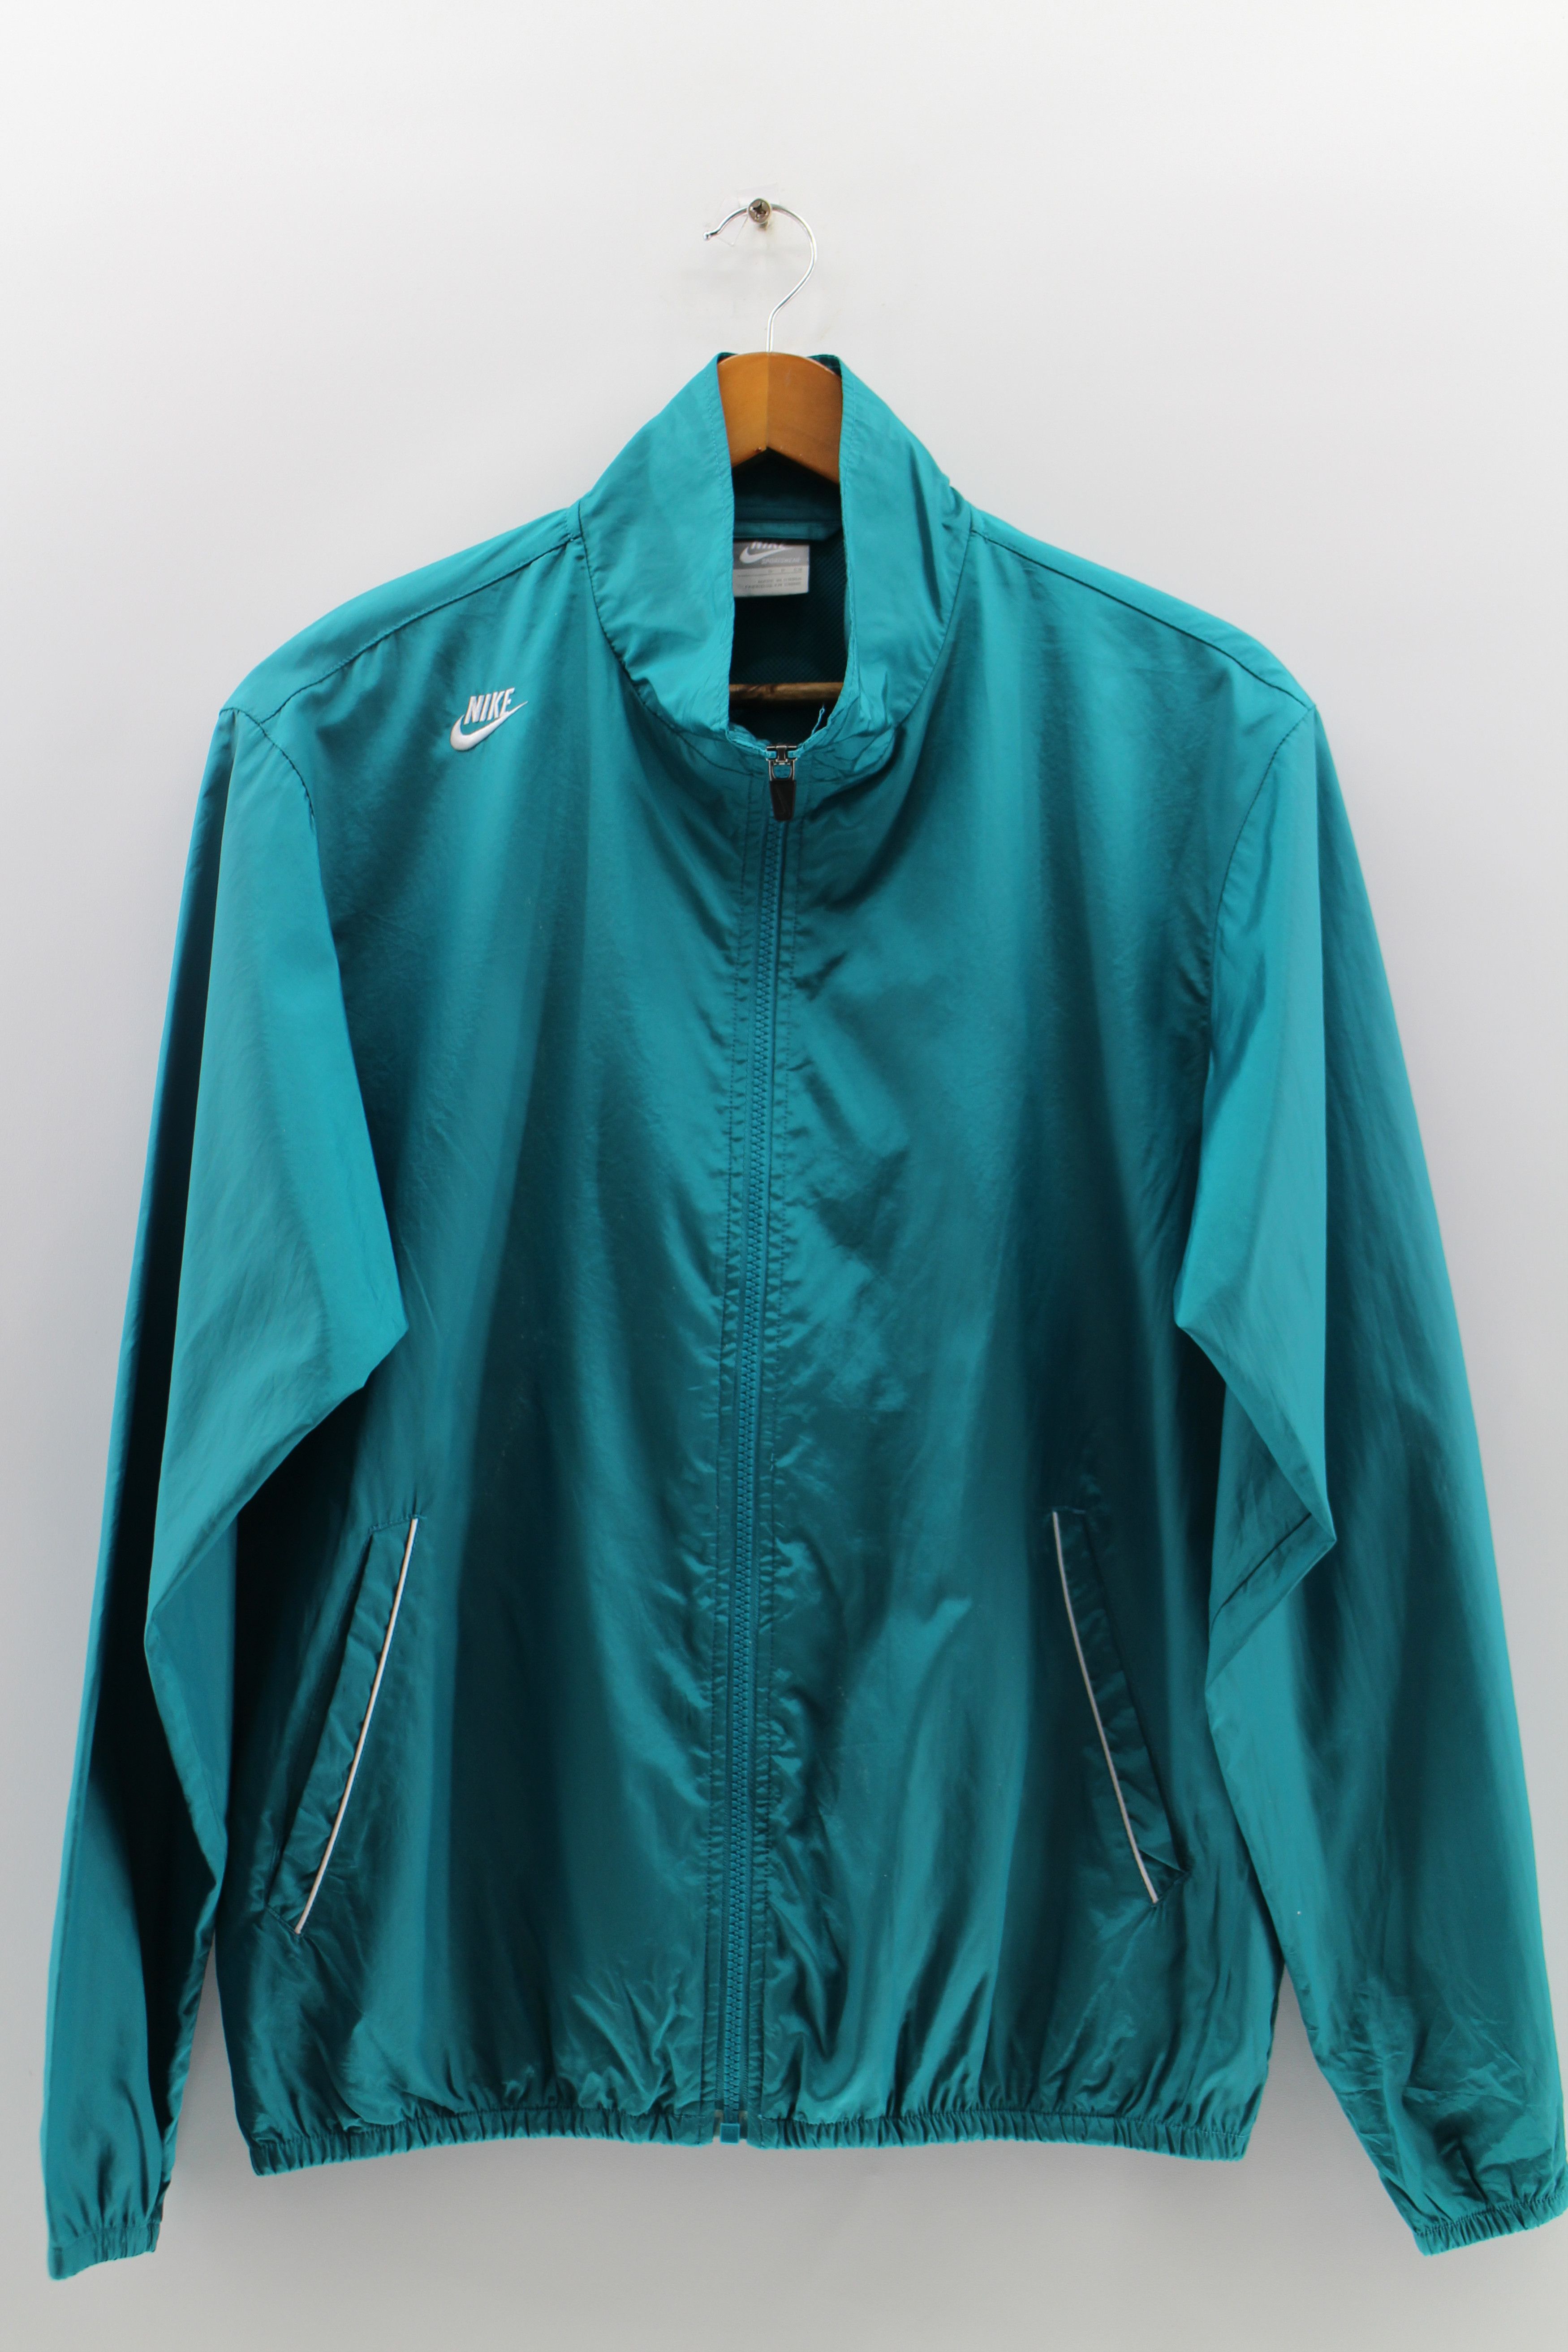 Nike NIKE Swoosh Windbreaker Jacket Unisex Vintage 90s Size M Size US M / EU 48-50 / 2 - 1 Preview